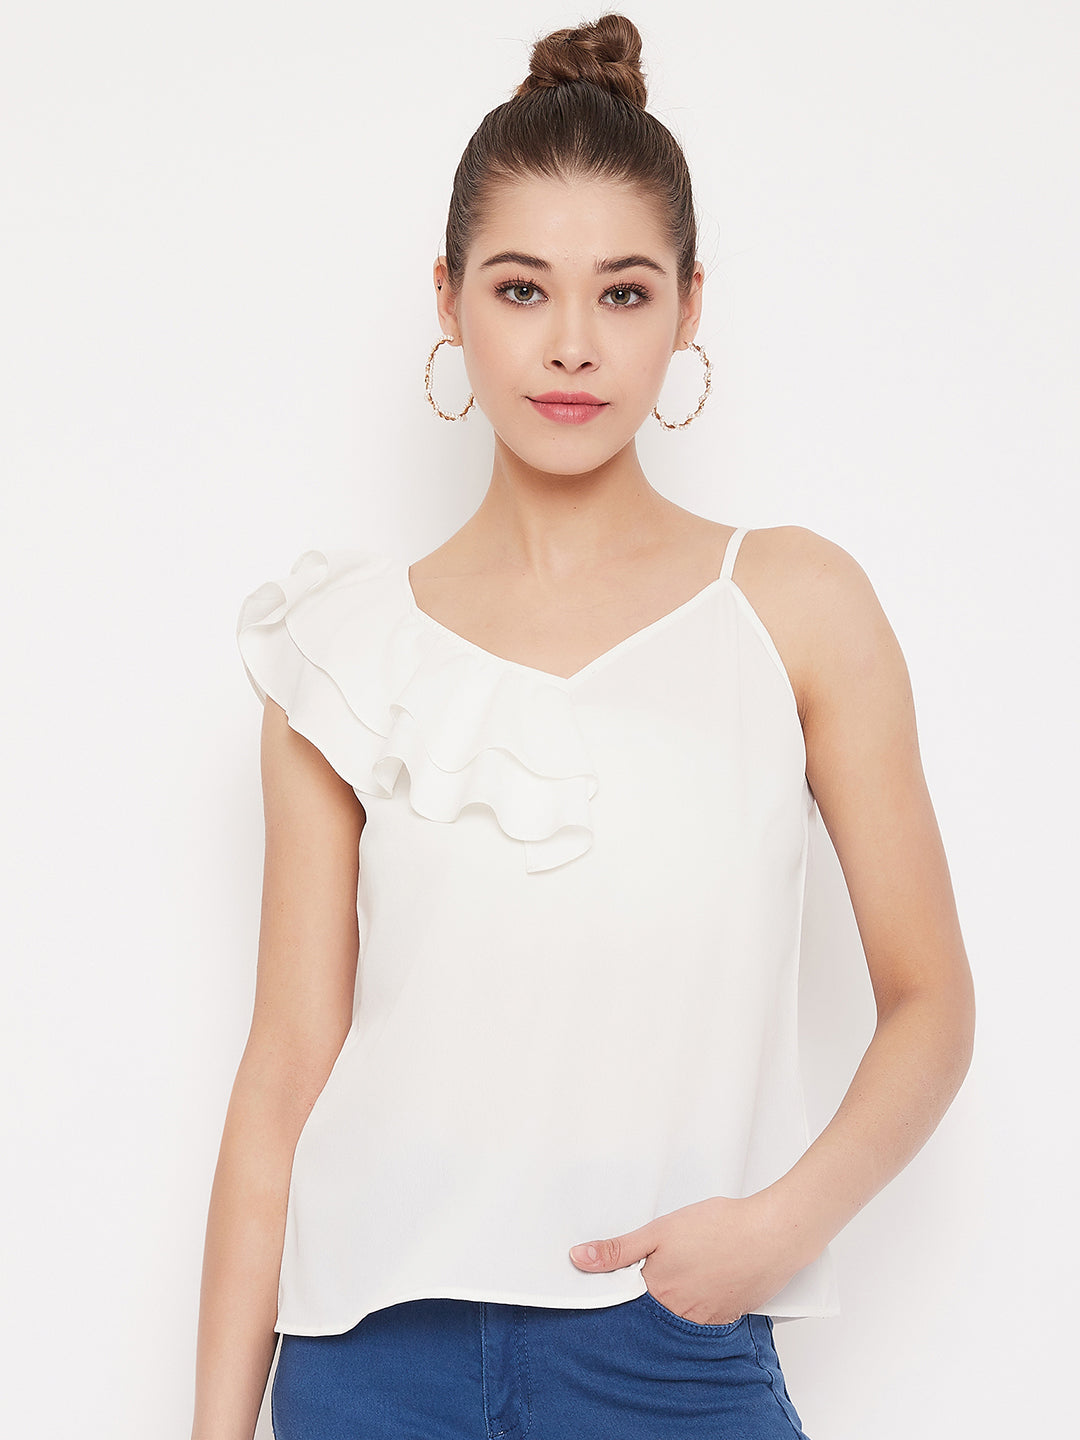 Berrylush Women Solid White Asymmetrical Ruffled Cami Top